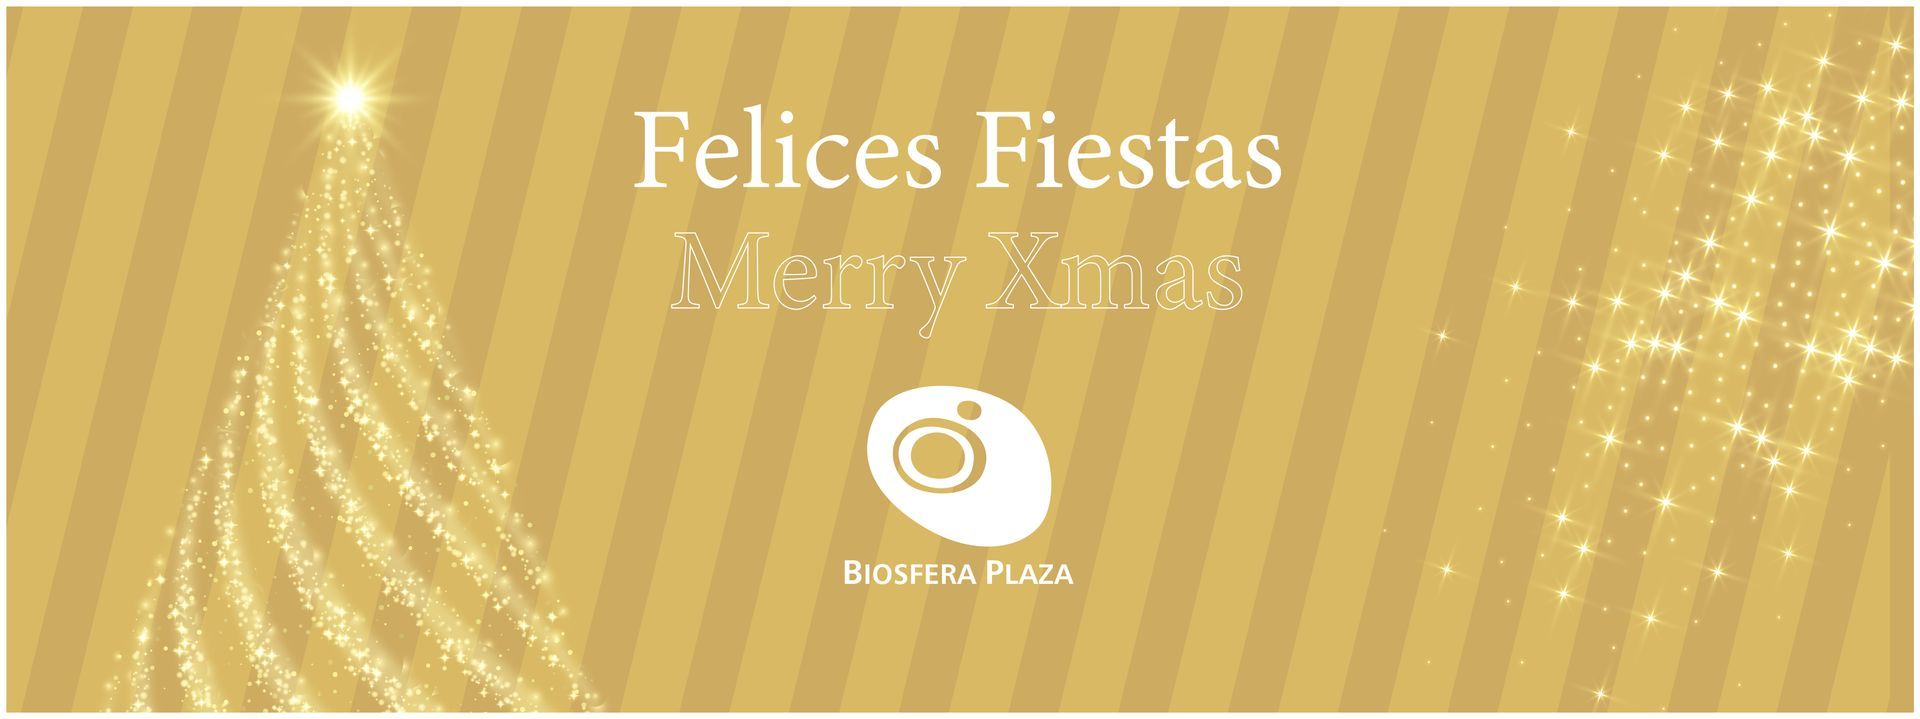 A month of December full of surprises at Biosfera Plaza Puerto del Carmen Lanzarote!